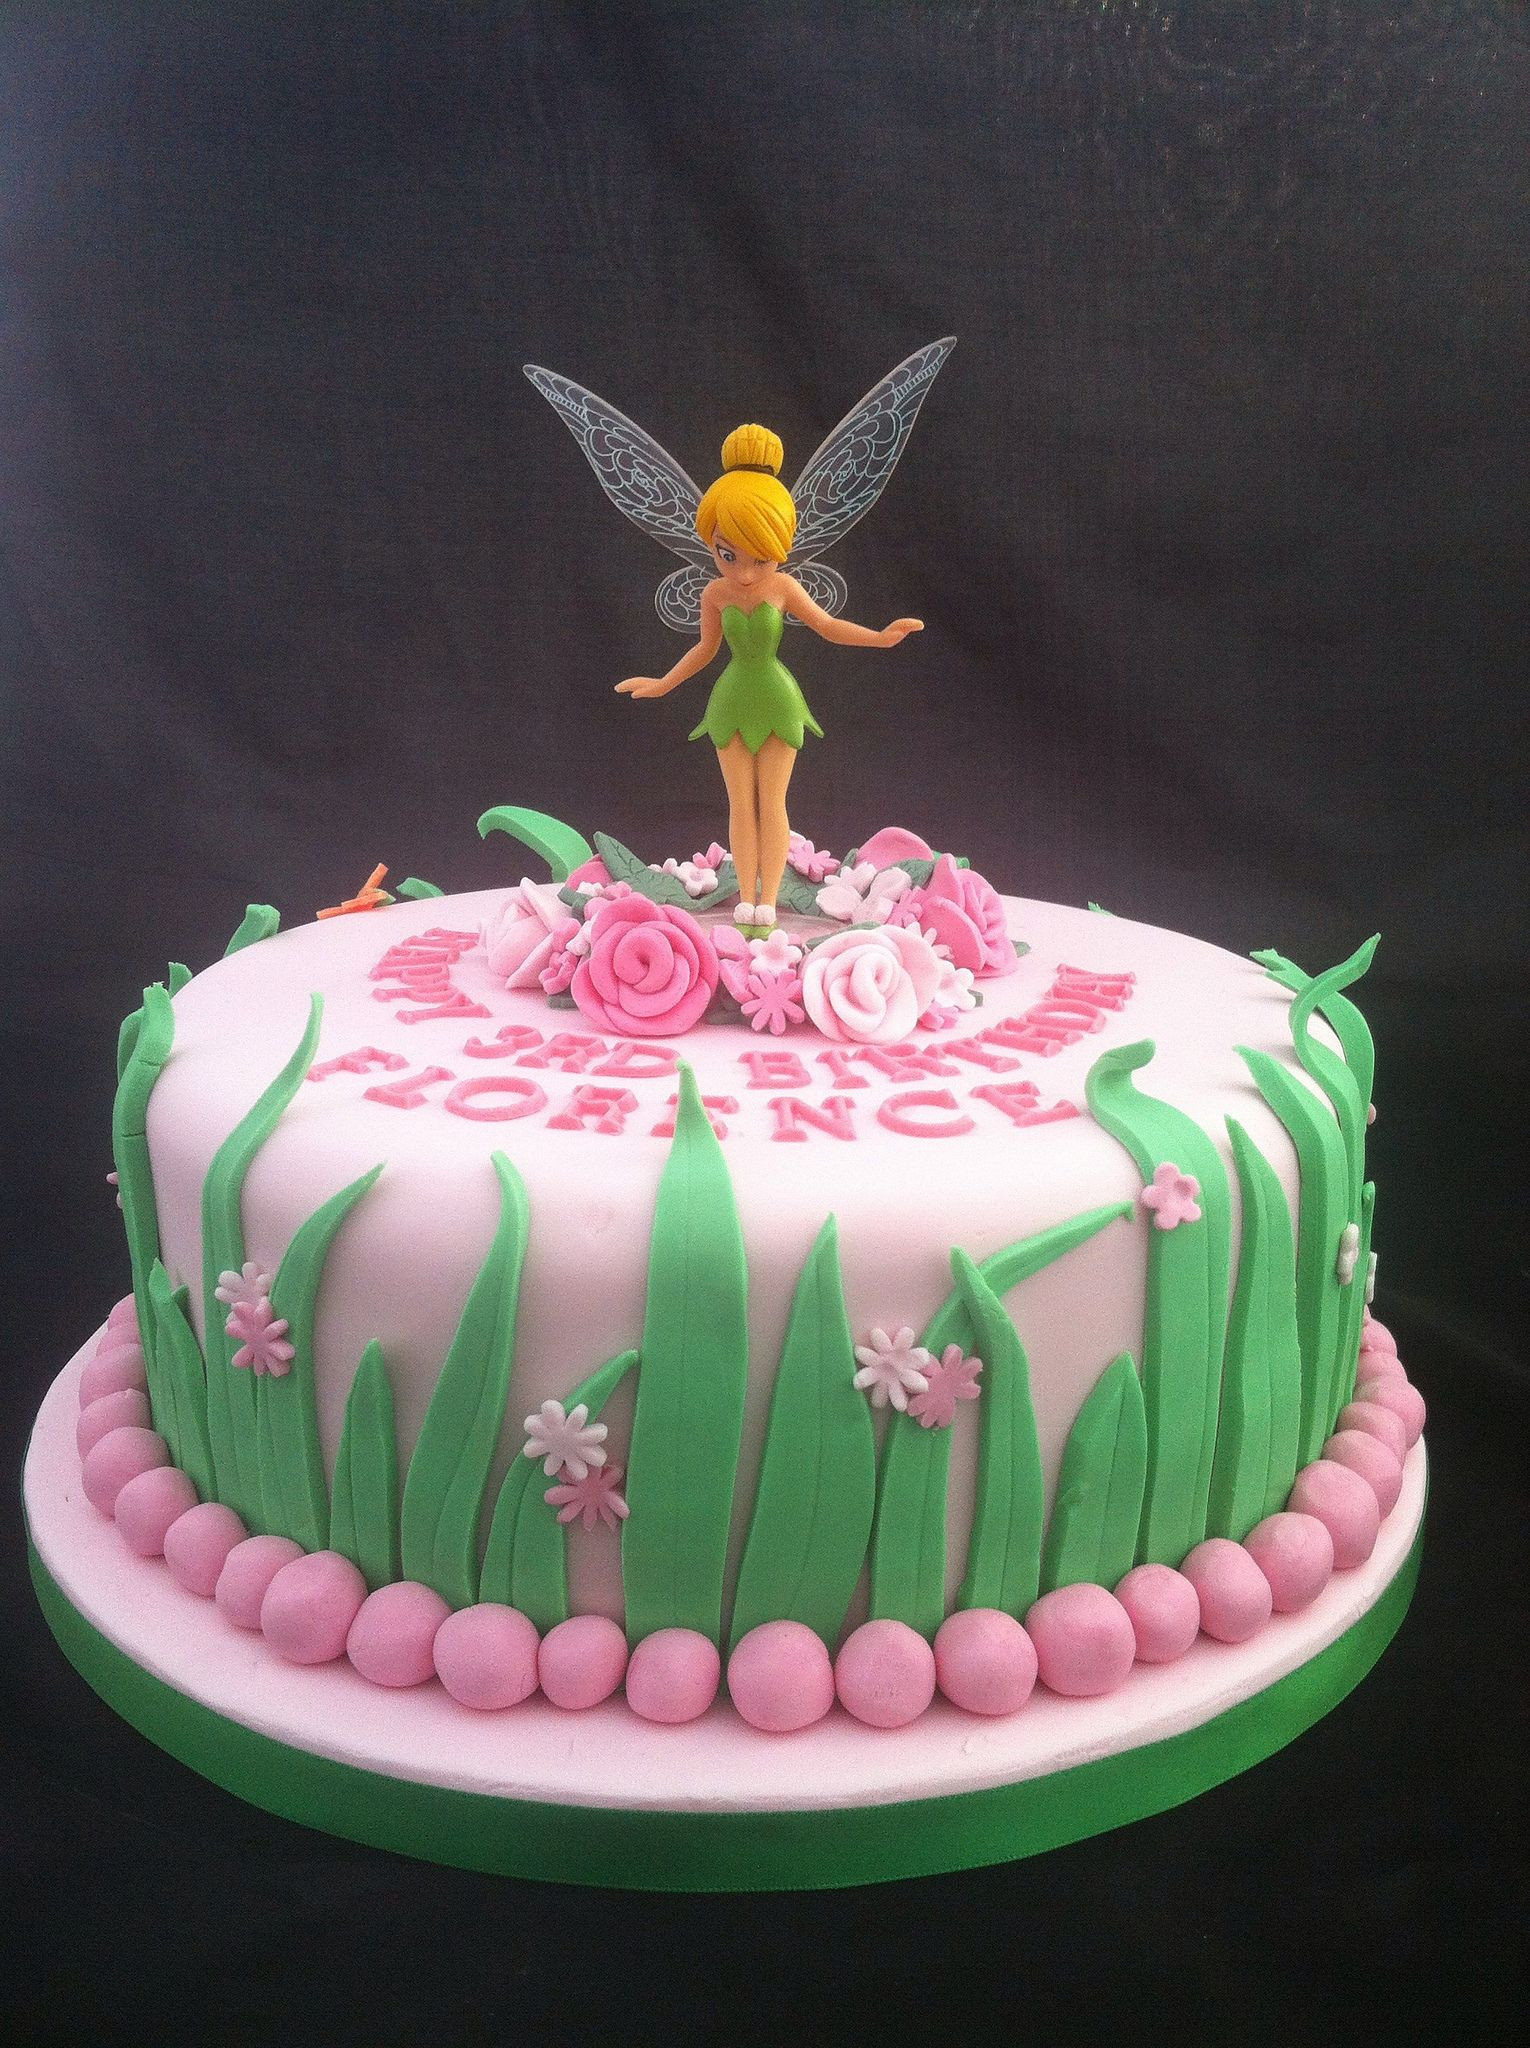 Tinkerbell Birthday Cakes
 Tinkerbell cake